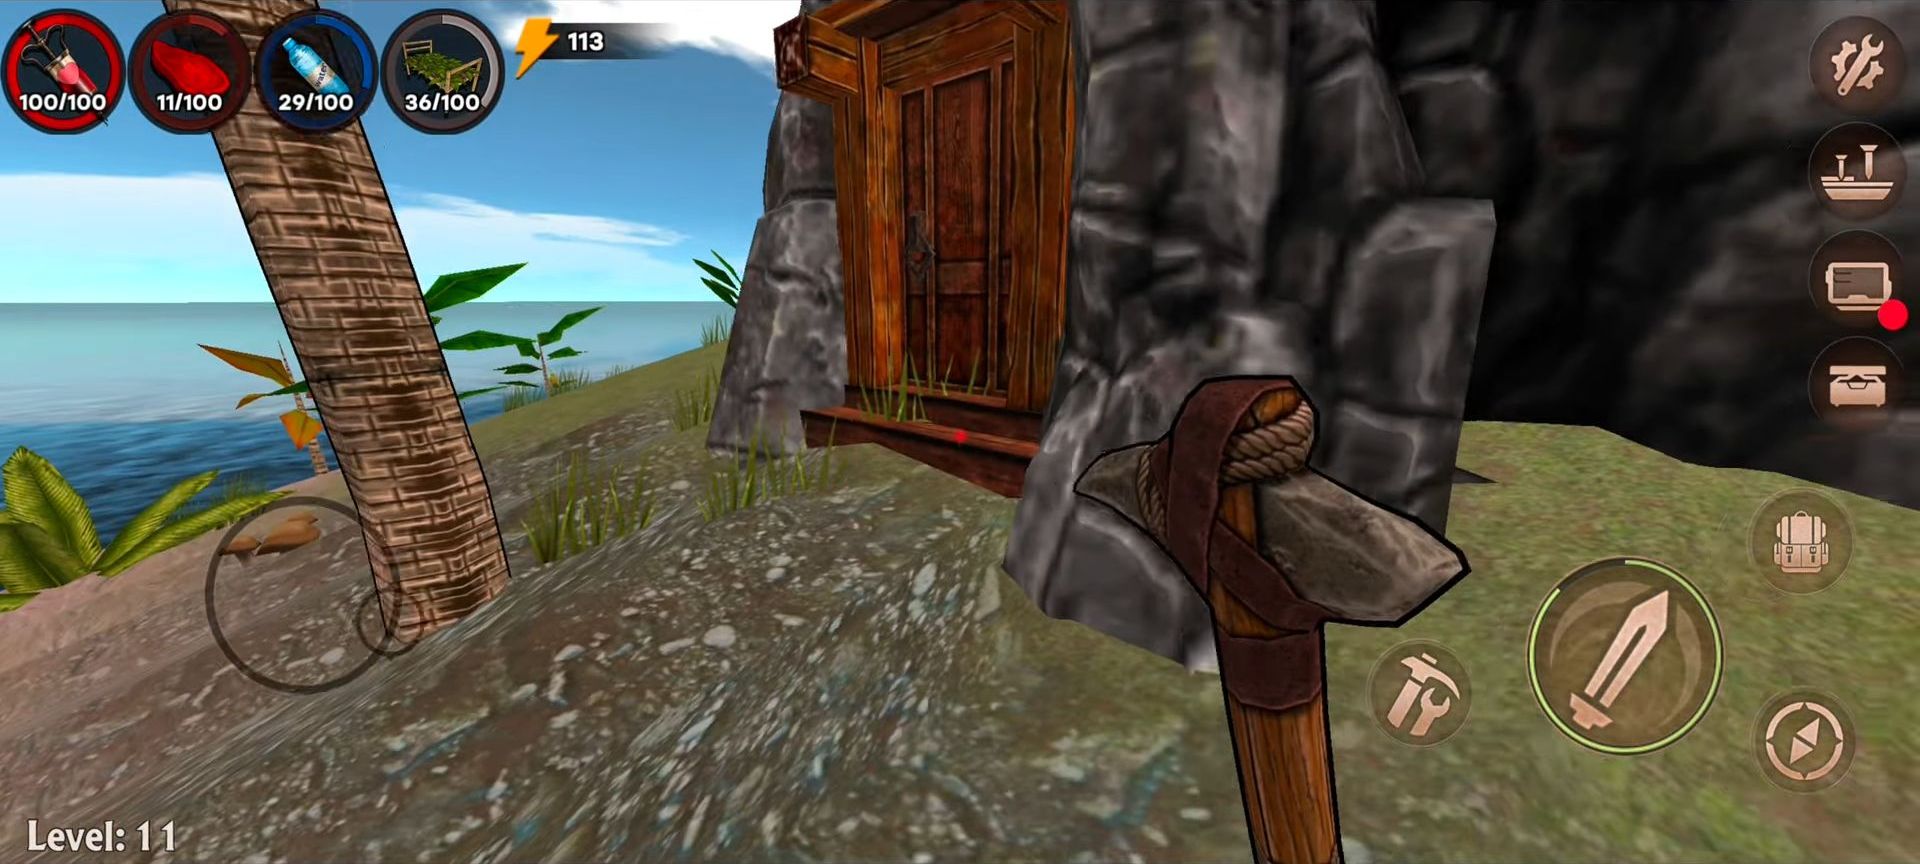 Last Maverick: Raft Games Pro - Android game screenshots.